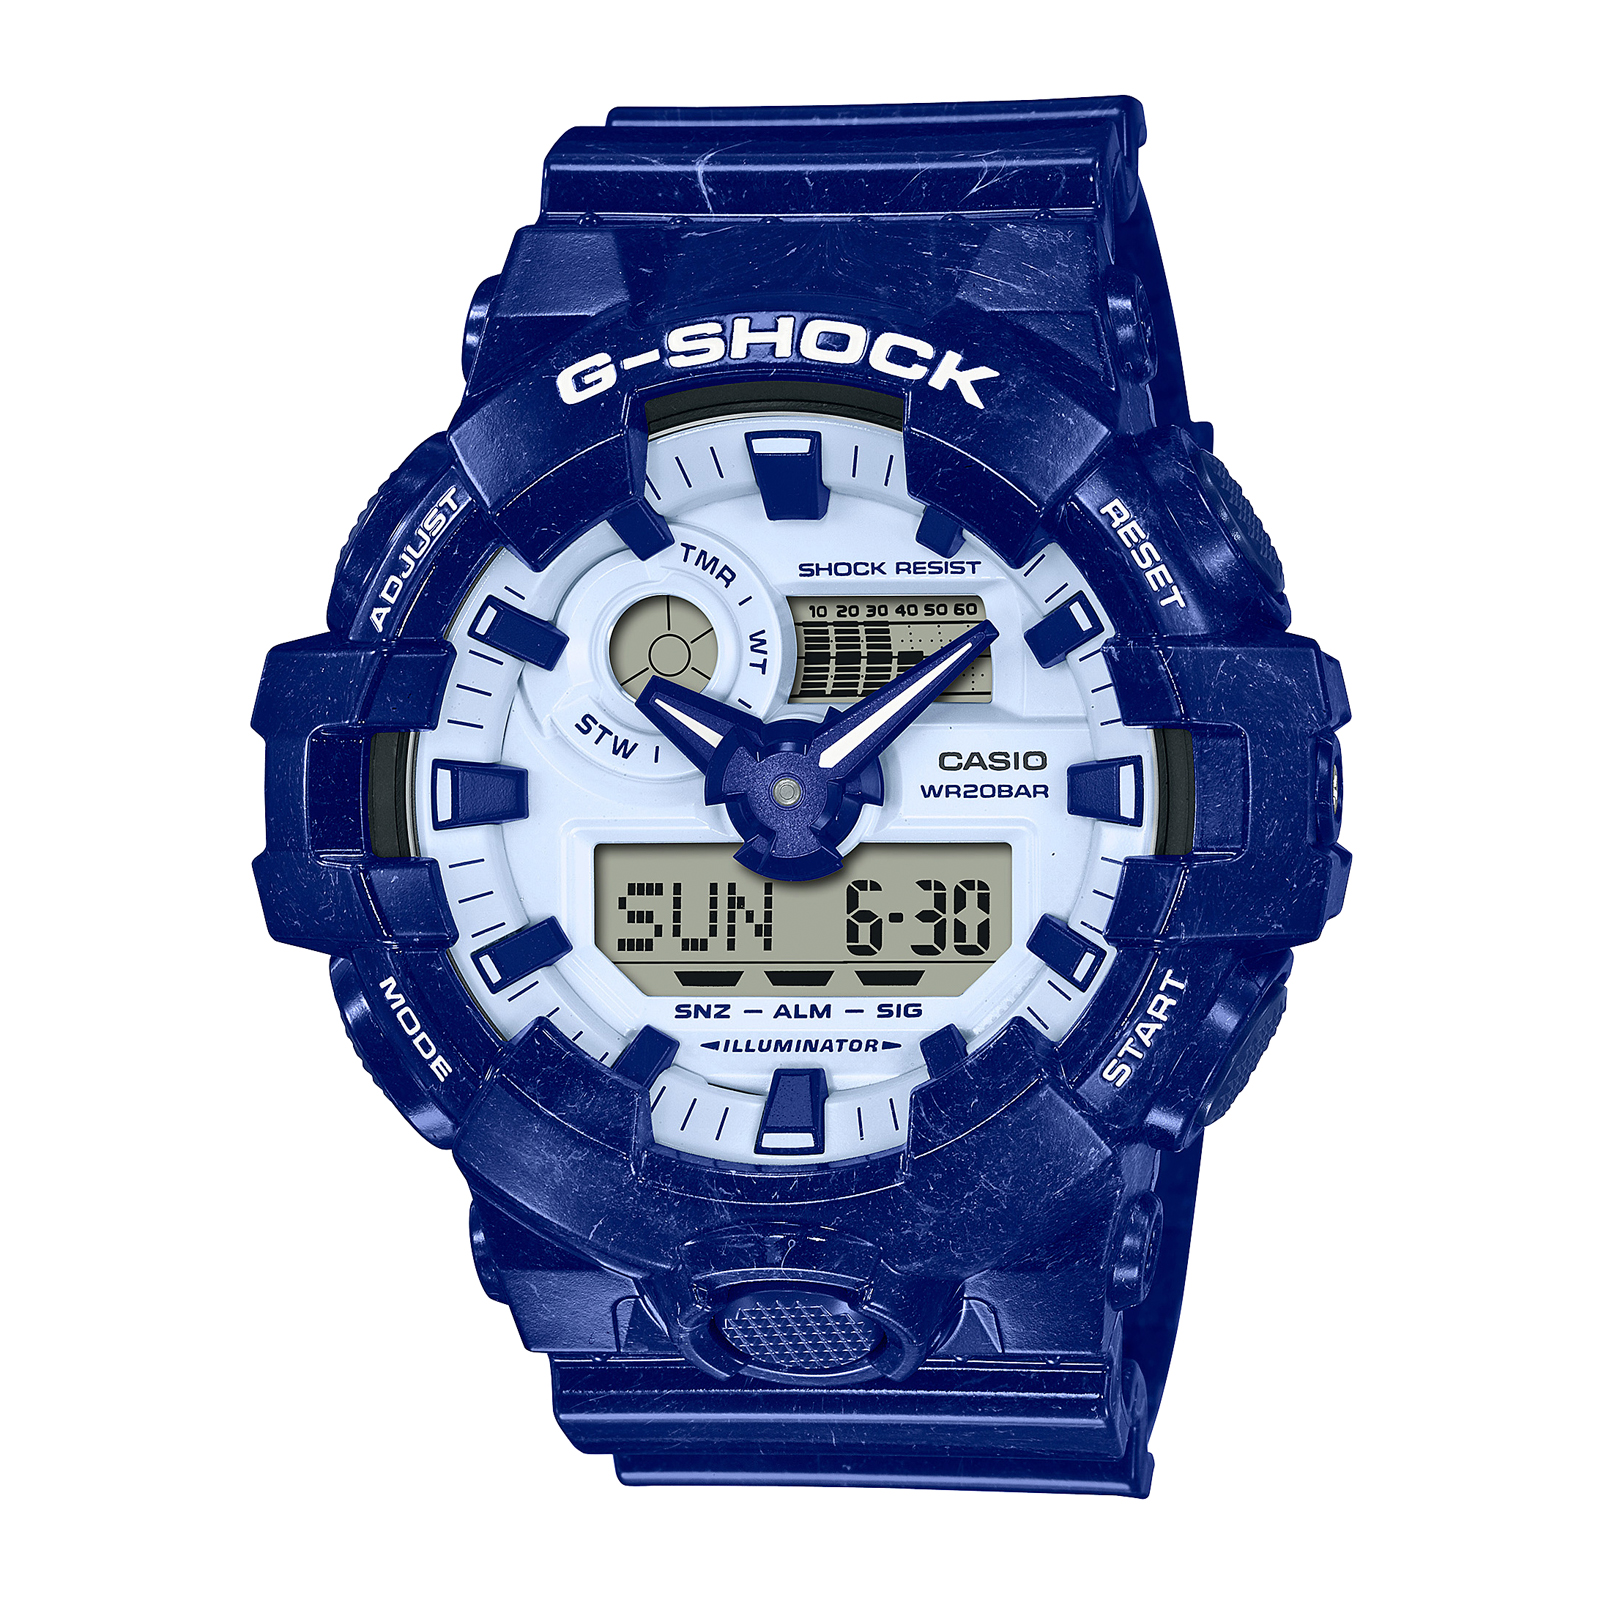 Reloj G-SHOCK GA-700BWP-2A Resina Hombre Azul